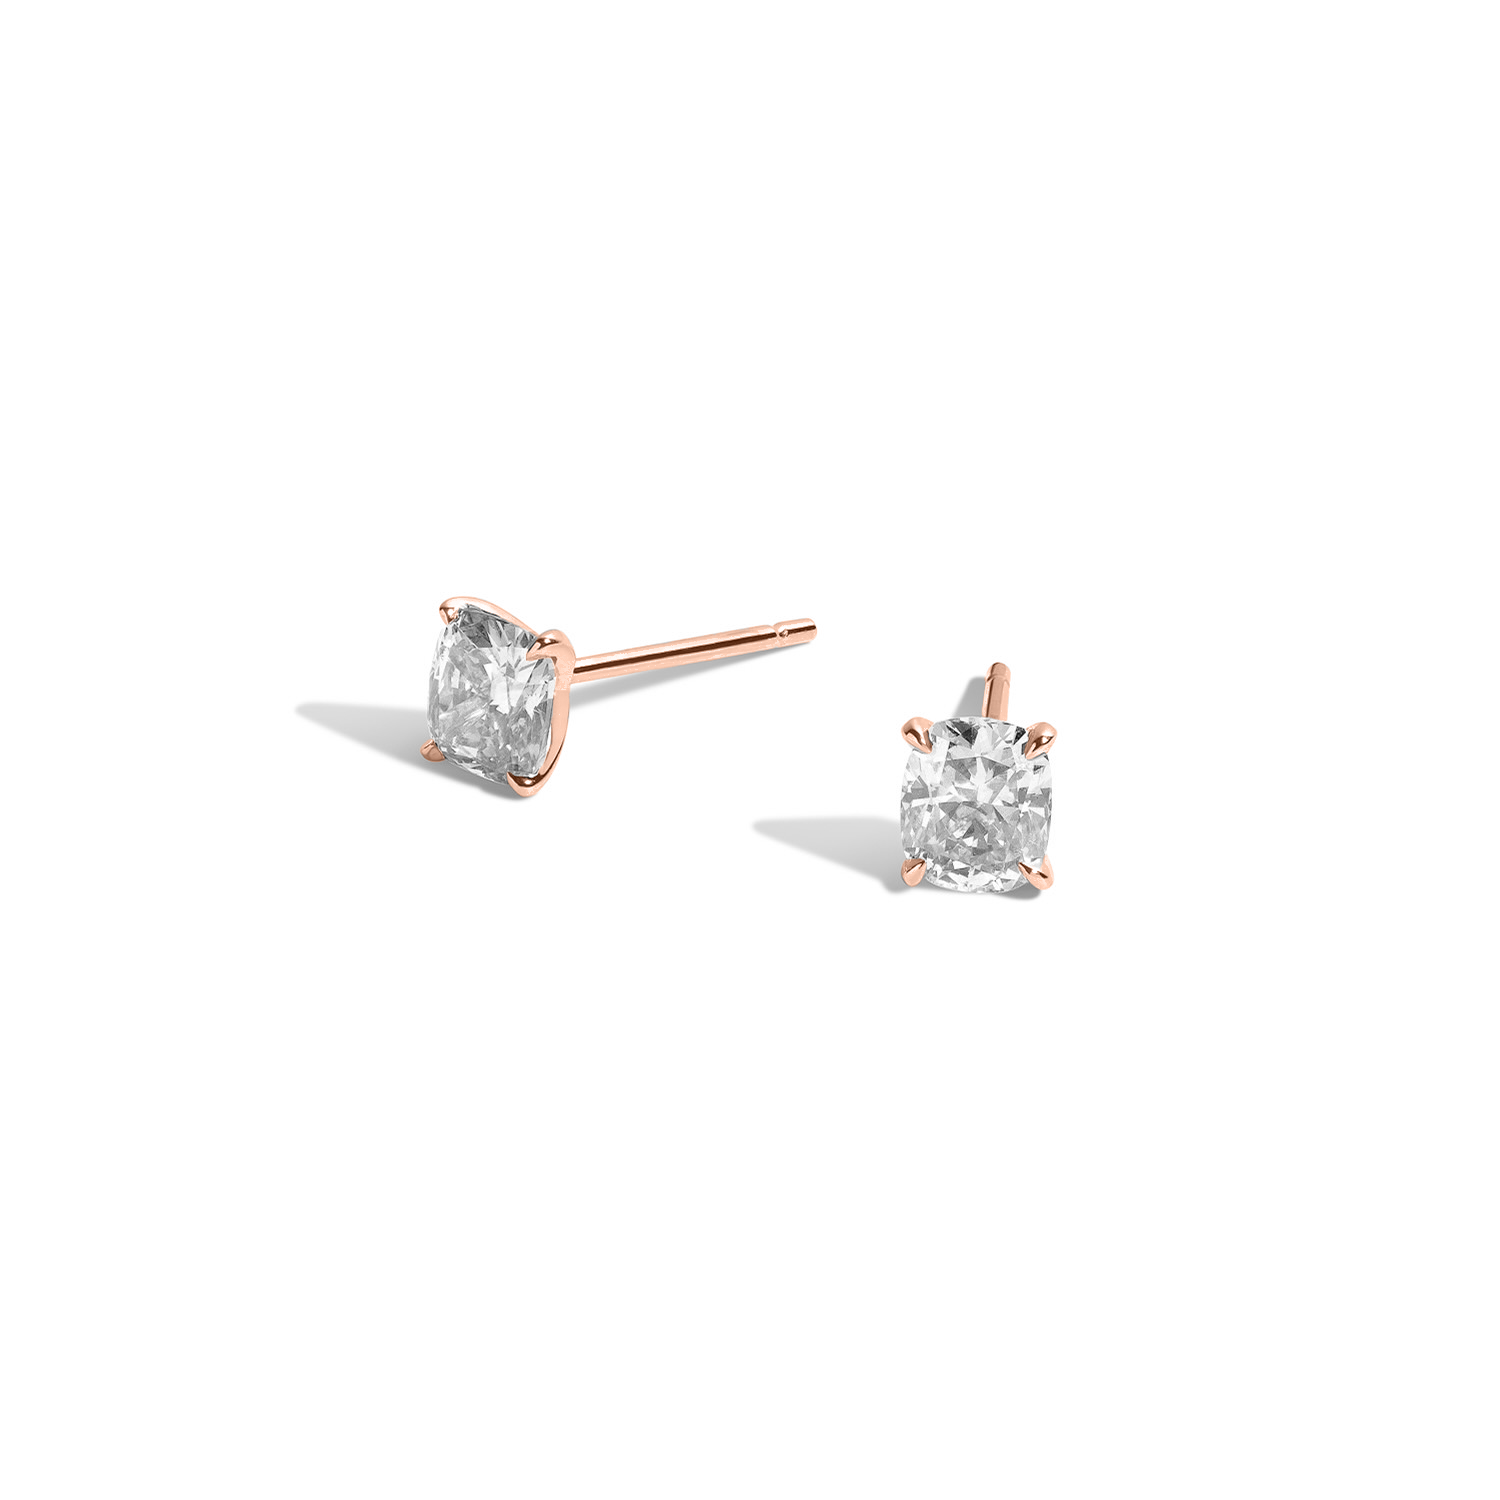 Shahla Karimi Oval Diamond Earrings in 14K Rose Gold